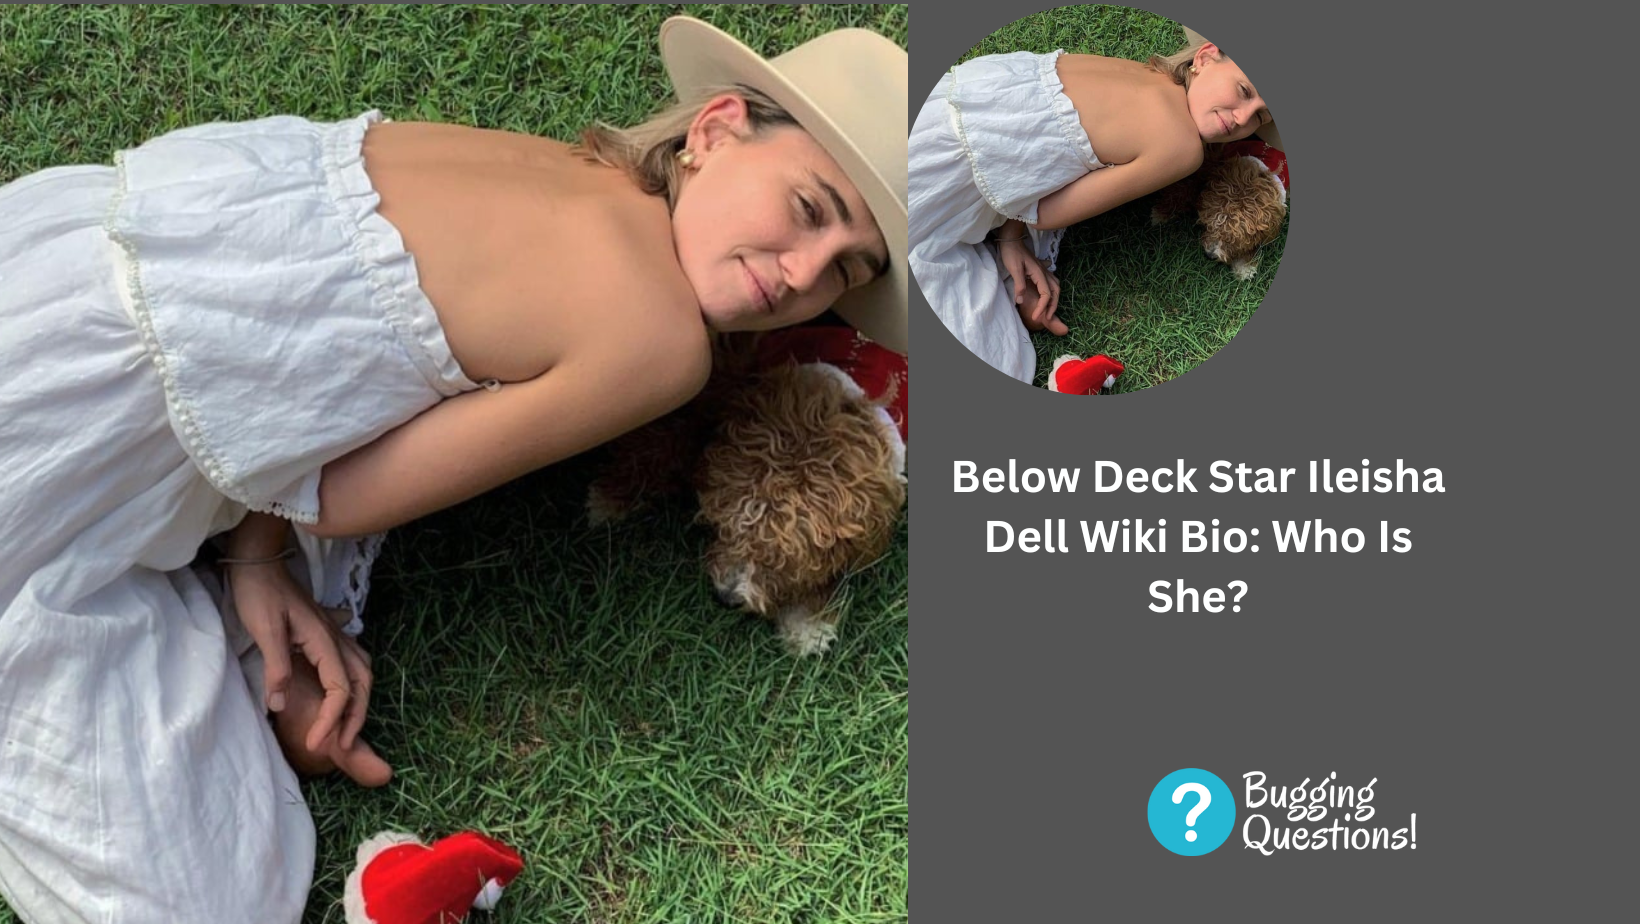 Below Deck Star Ileisha Dell Wiki Bio: Who Is She?